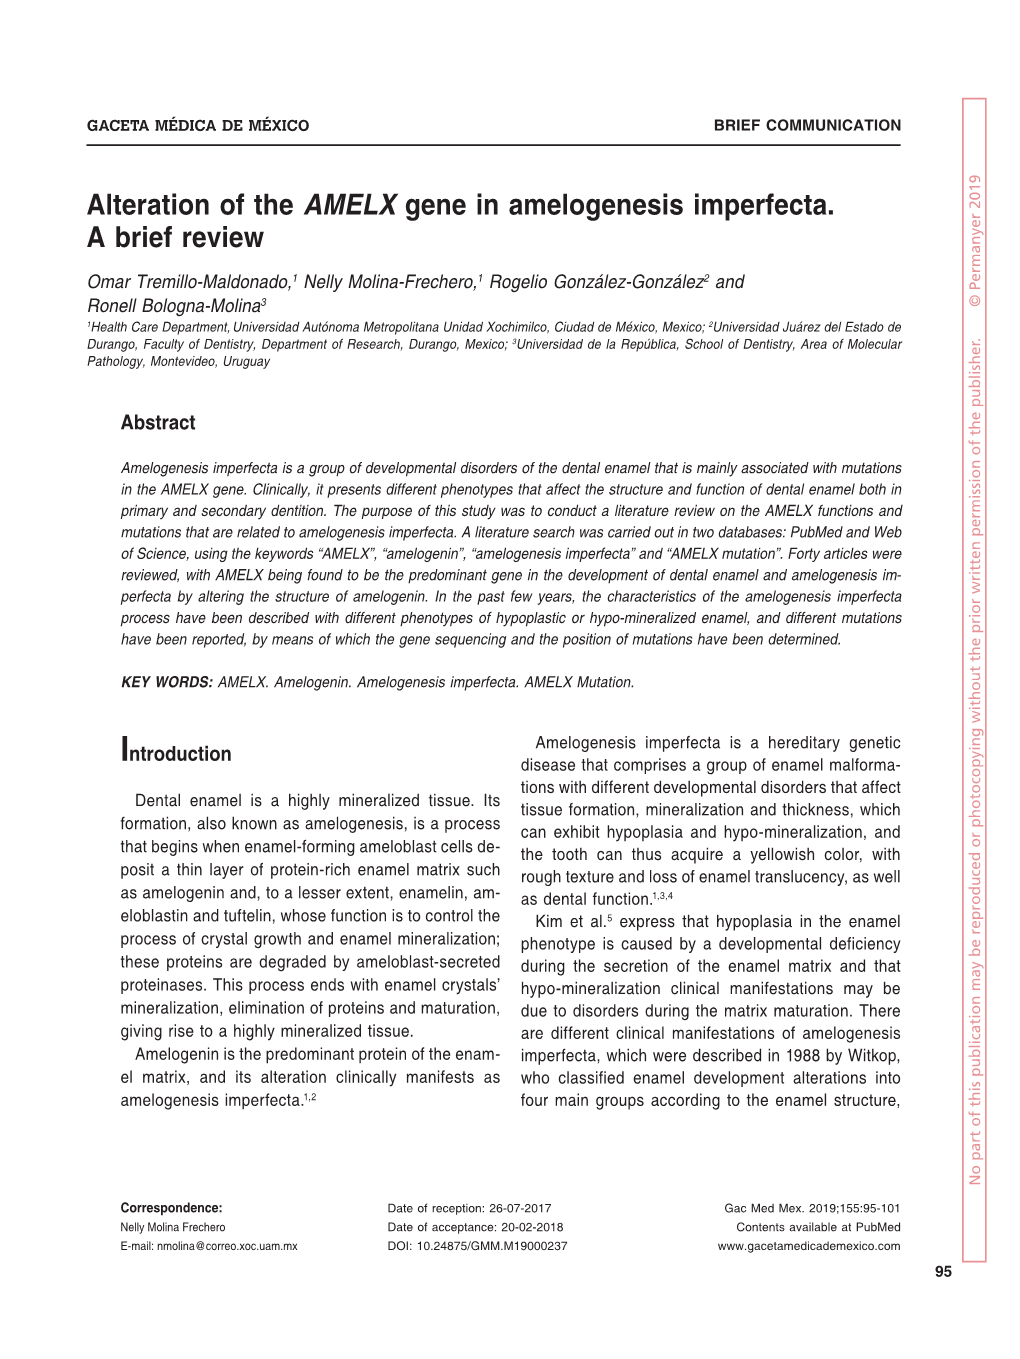 Alteration of the AMELX Gene in Amelogenesis Imperfecta. a Brief Review Omar Tremillo-Maldonado,1 Nelly Molina-Frechero,1 Rogelio González-González2 And